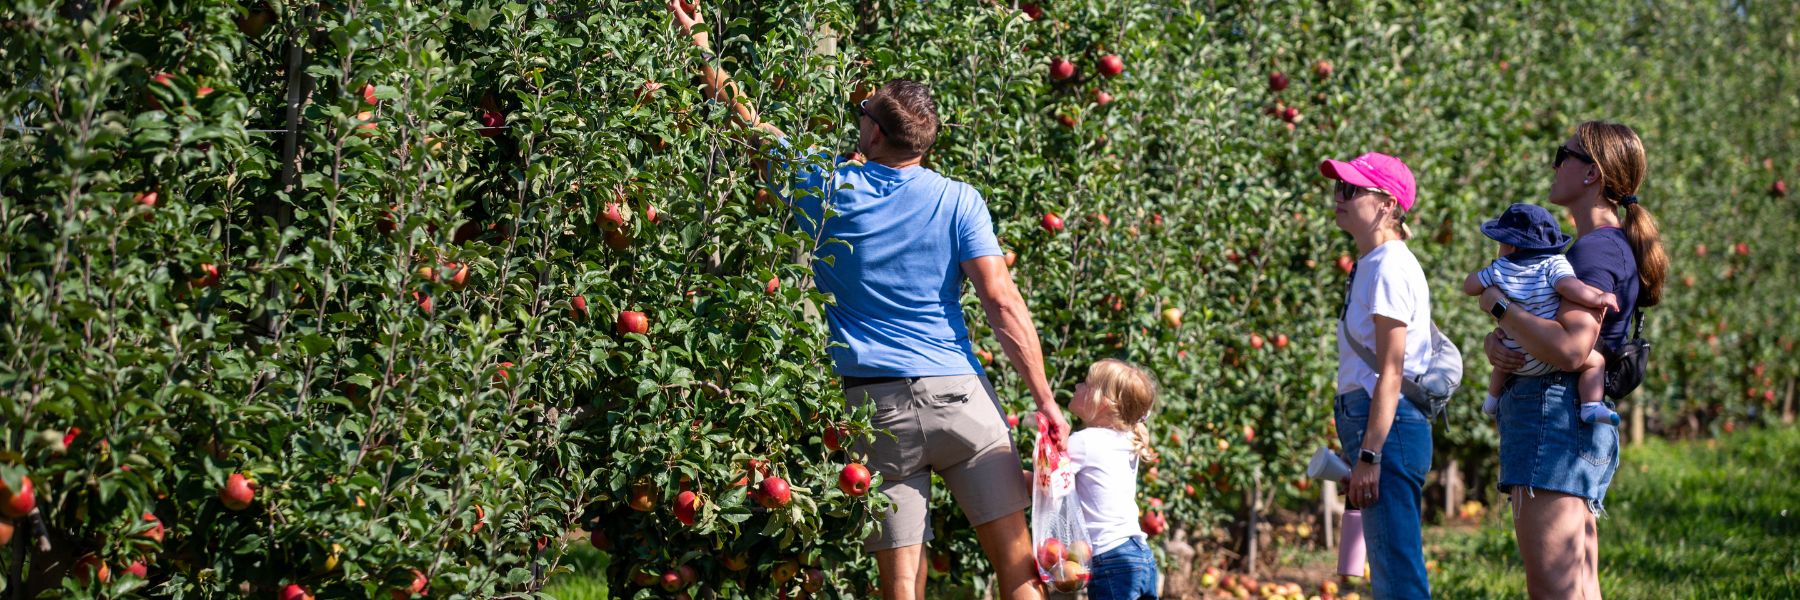 A family picks apples at Eckert's Farm.